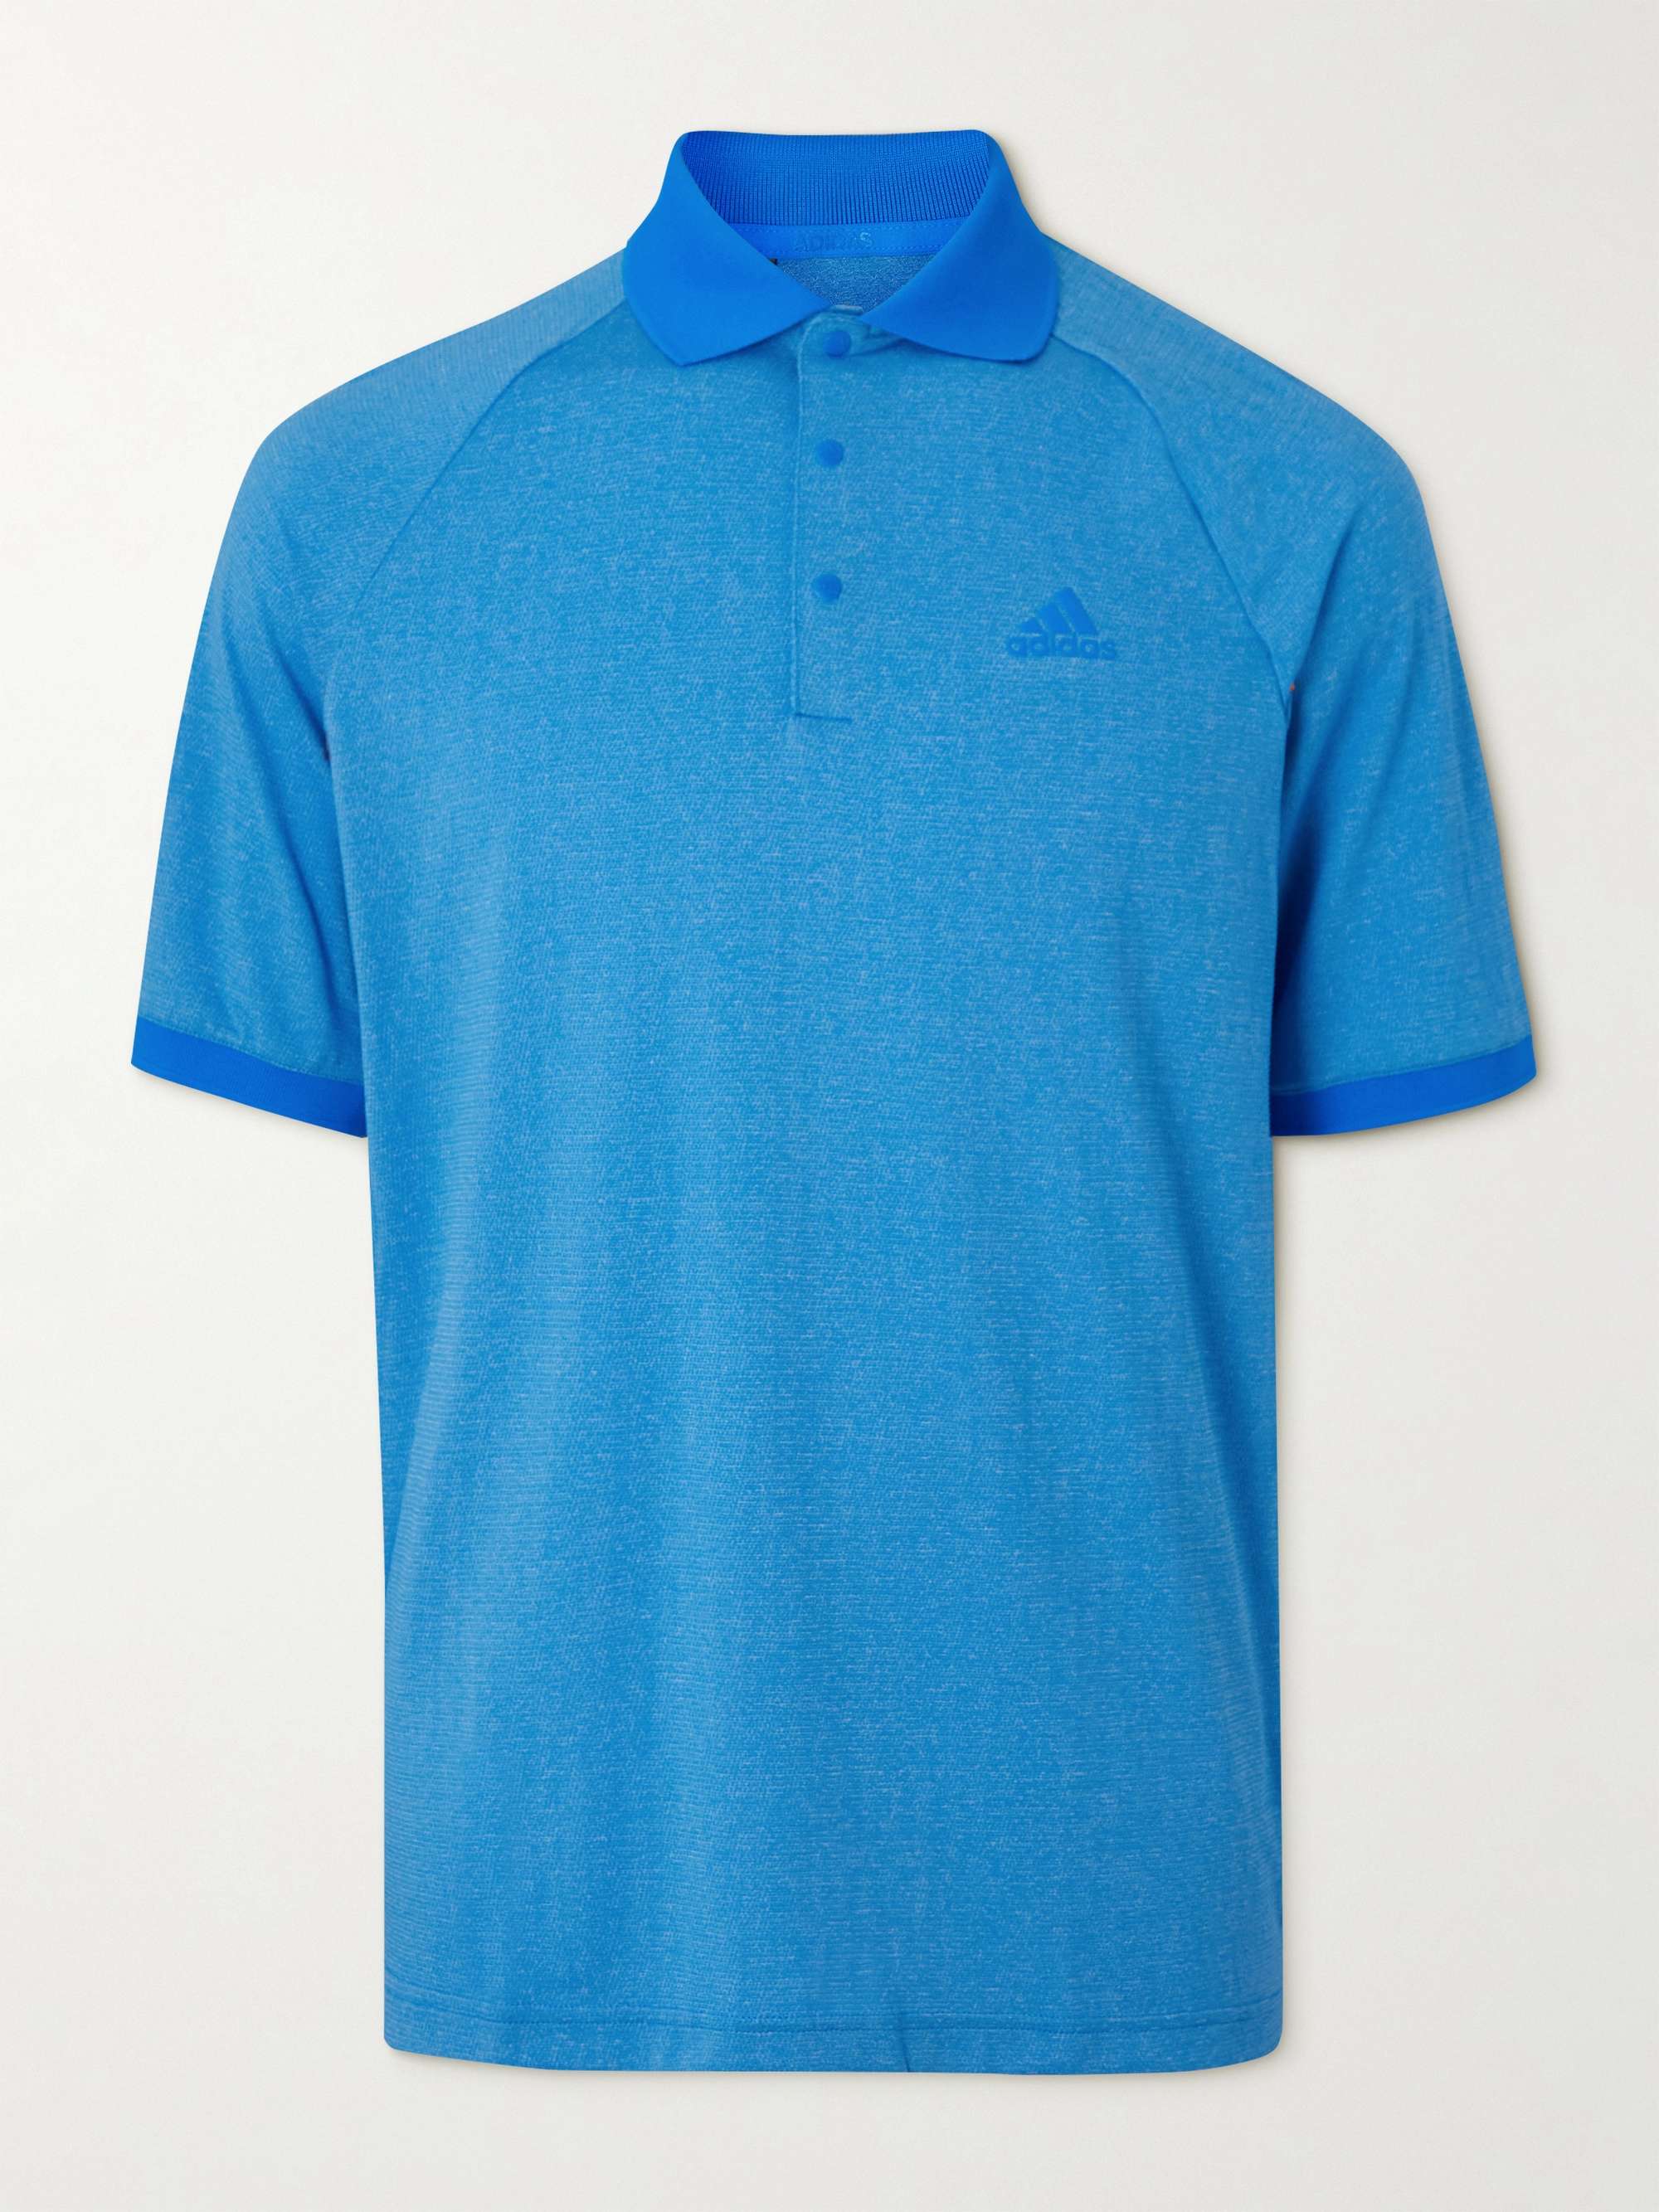 ADIDAS GOLF Logo-Print Recycled Jacquard Golf Polo Shirt